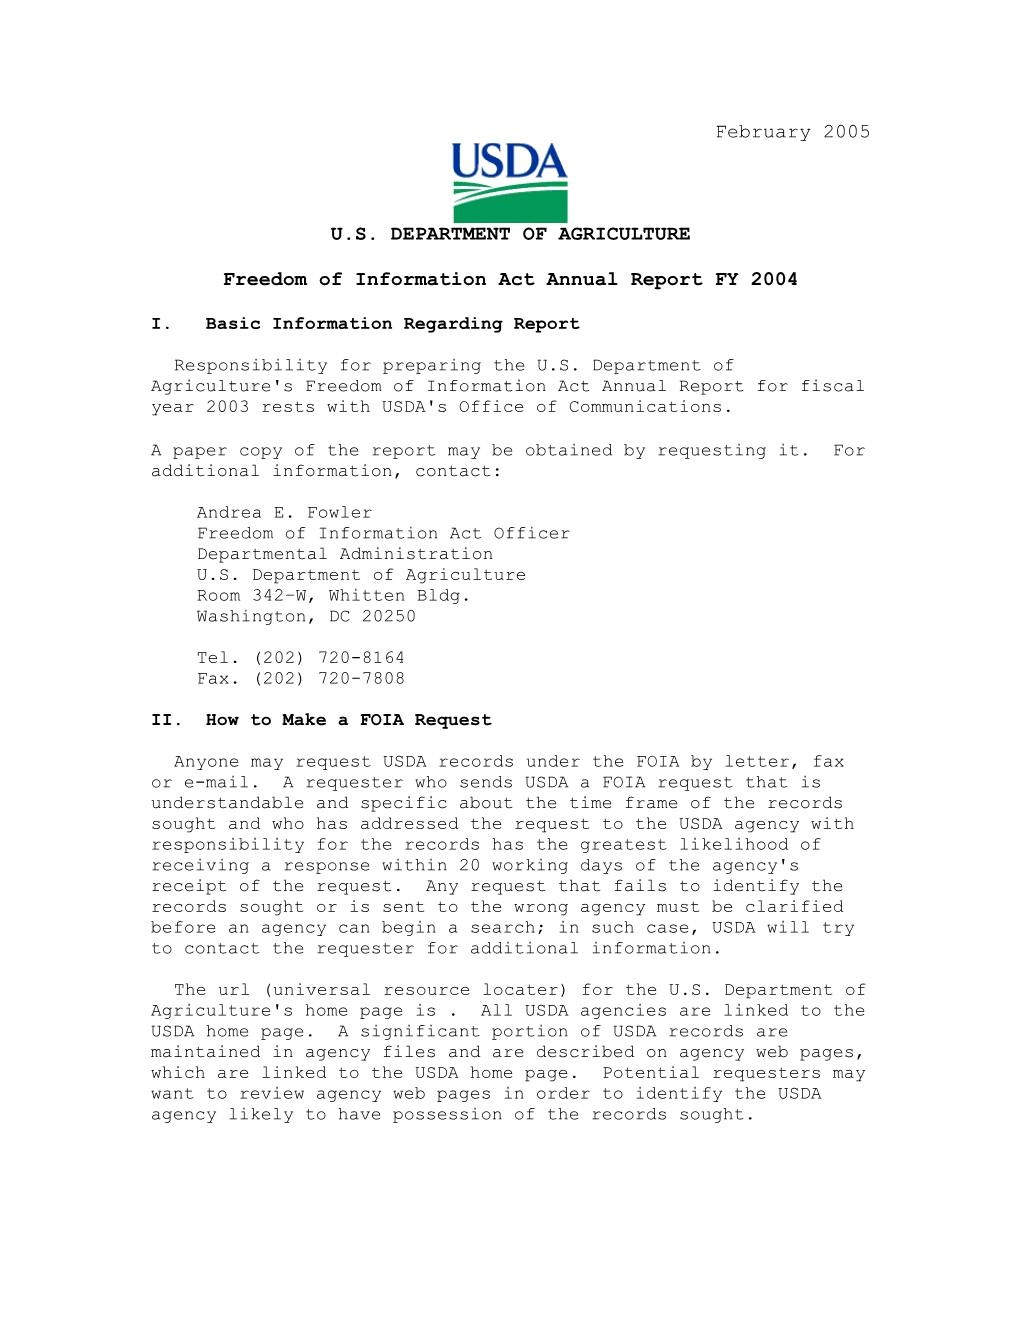 Doj Foia 2001 Annual Report - Initial Foia/Pa Access Requests